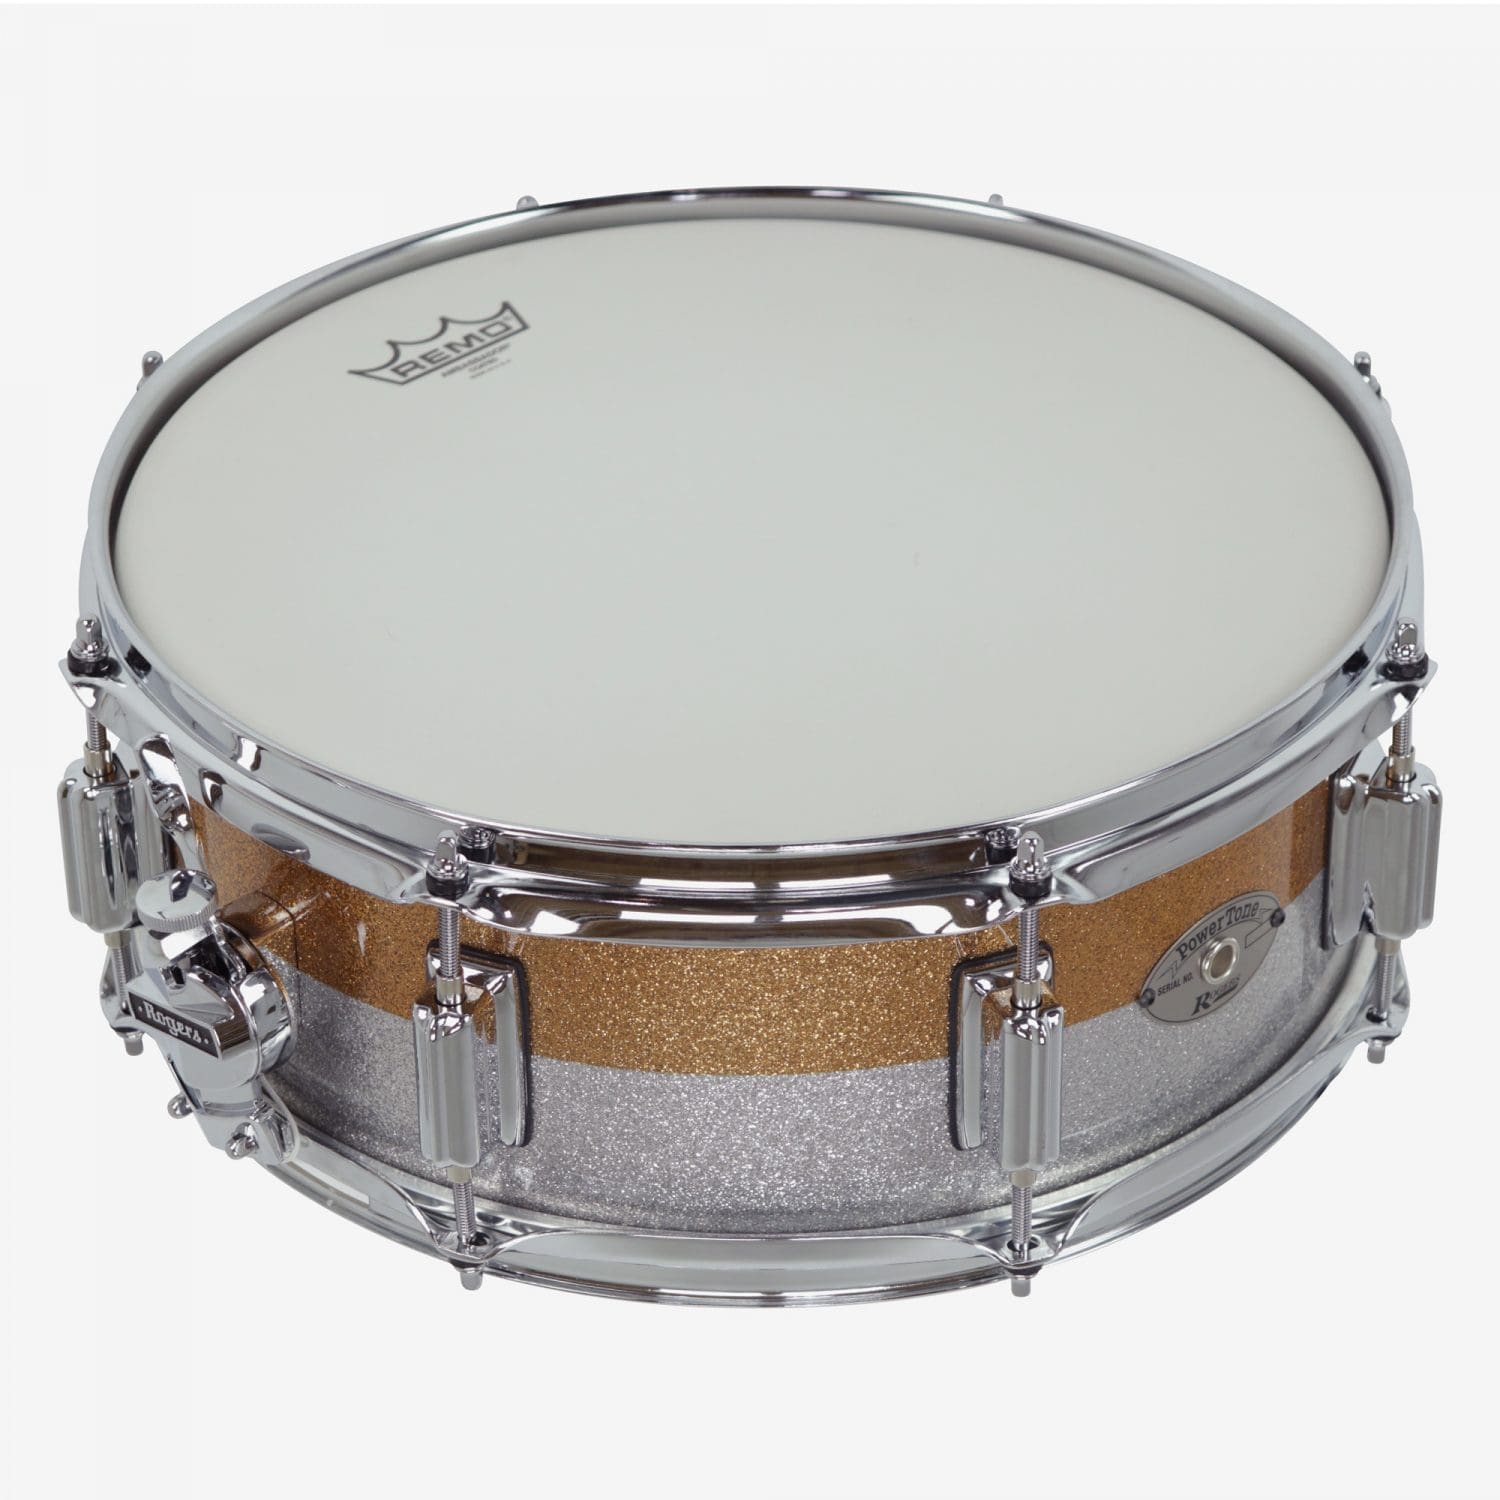 Gold/Silver Sparkle Two-Tone Lacquer PowerTone Snare Drum